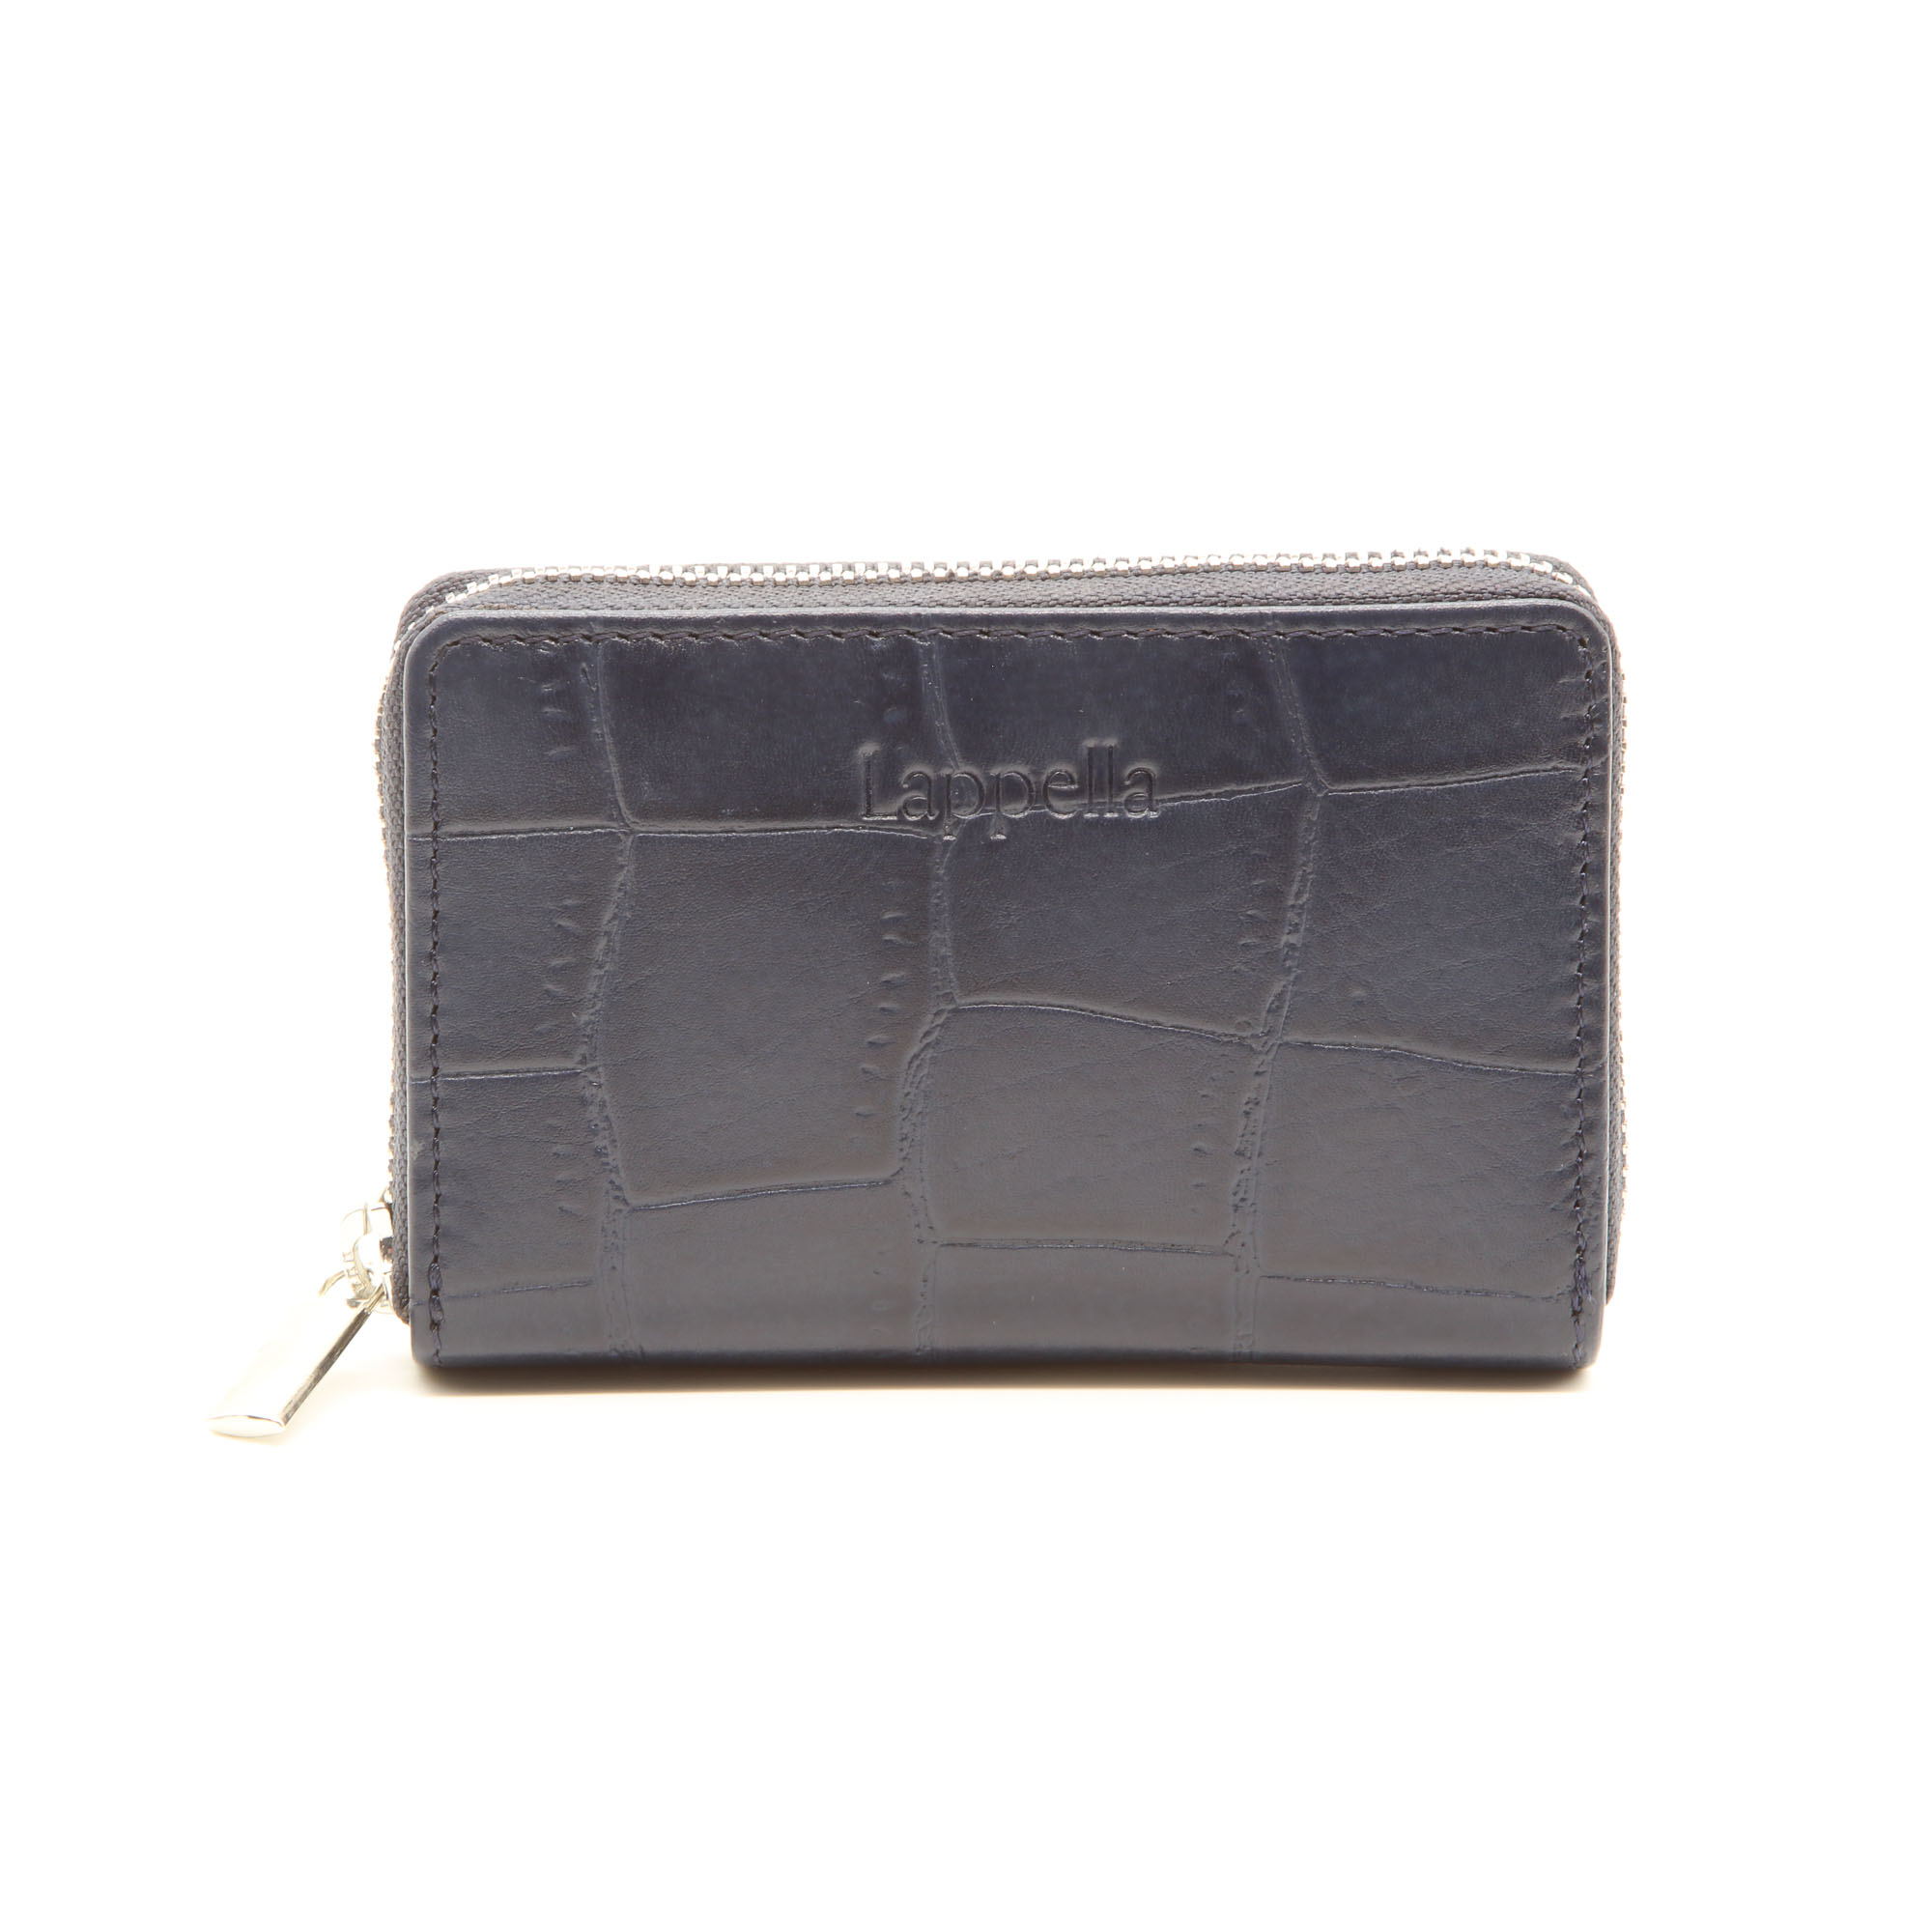 Eva small zip round purse in navy croc print leather.